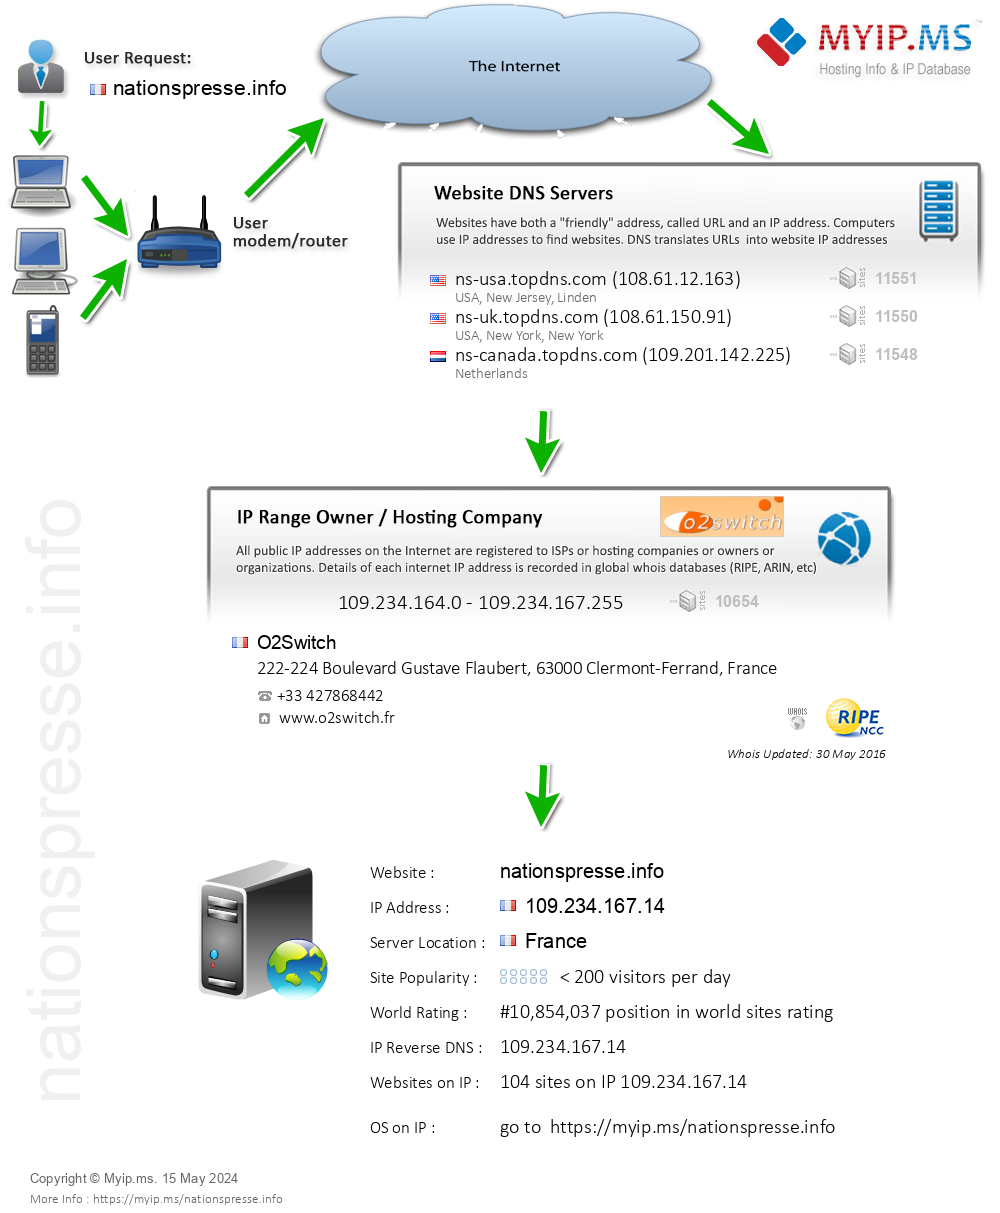 Nationspresse.info - Website Hosting Visual IP Diagram